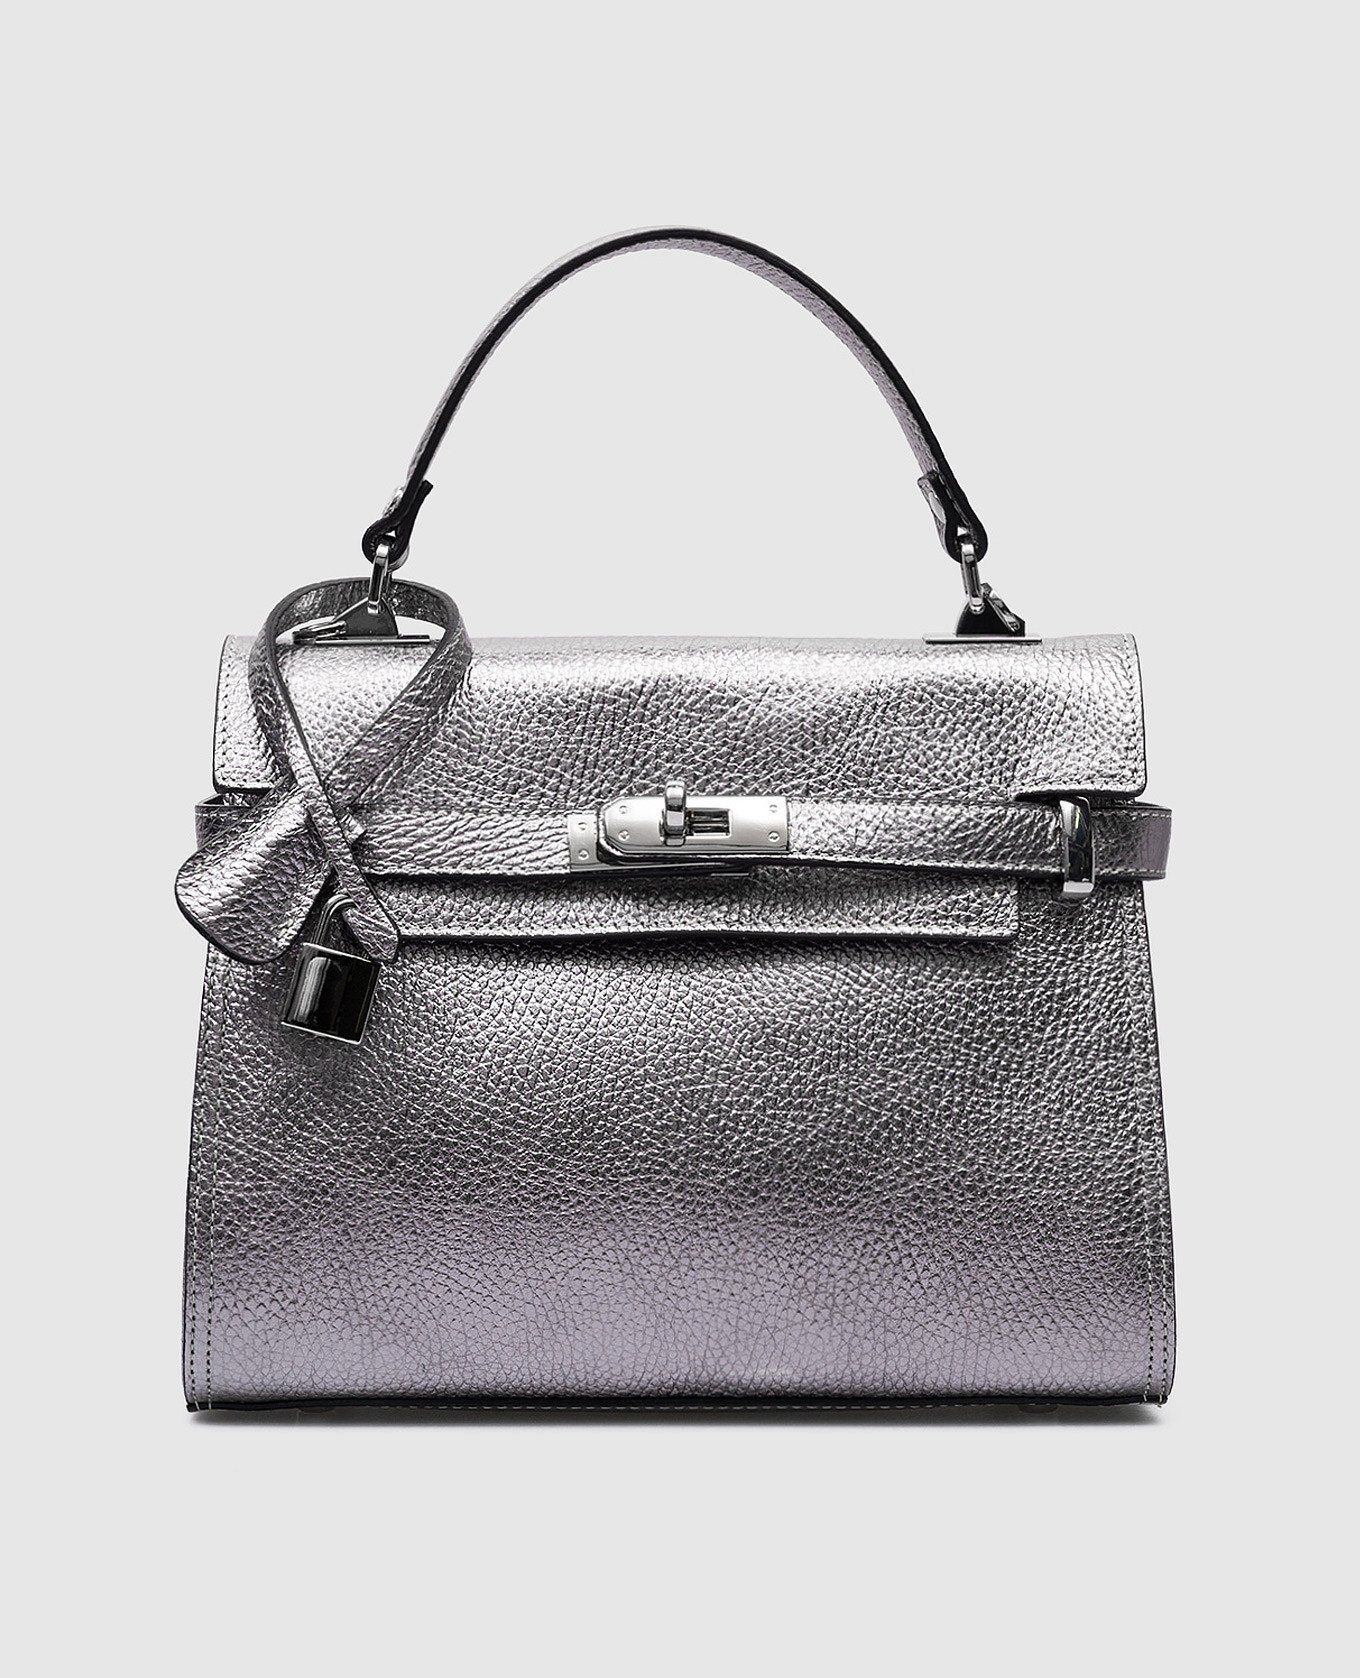 Silver leather satchel bag